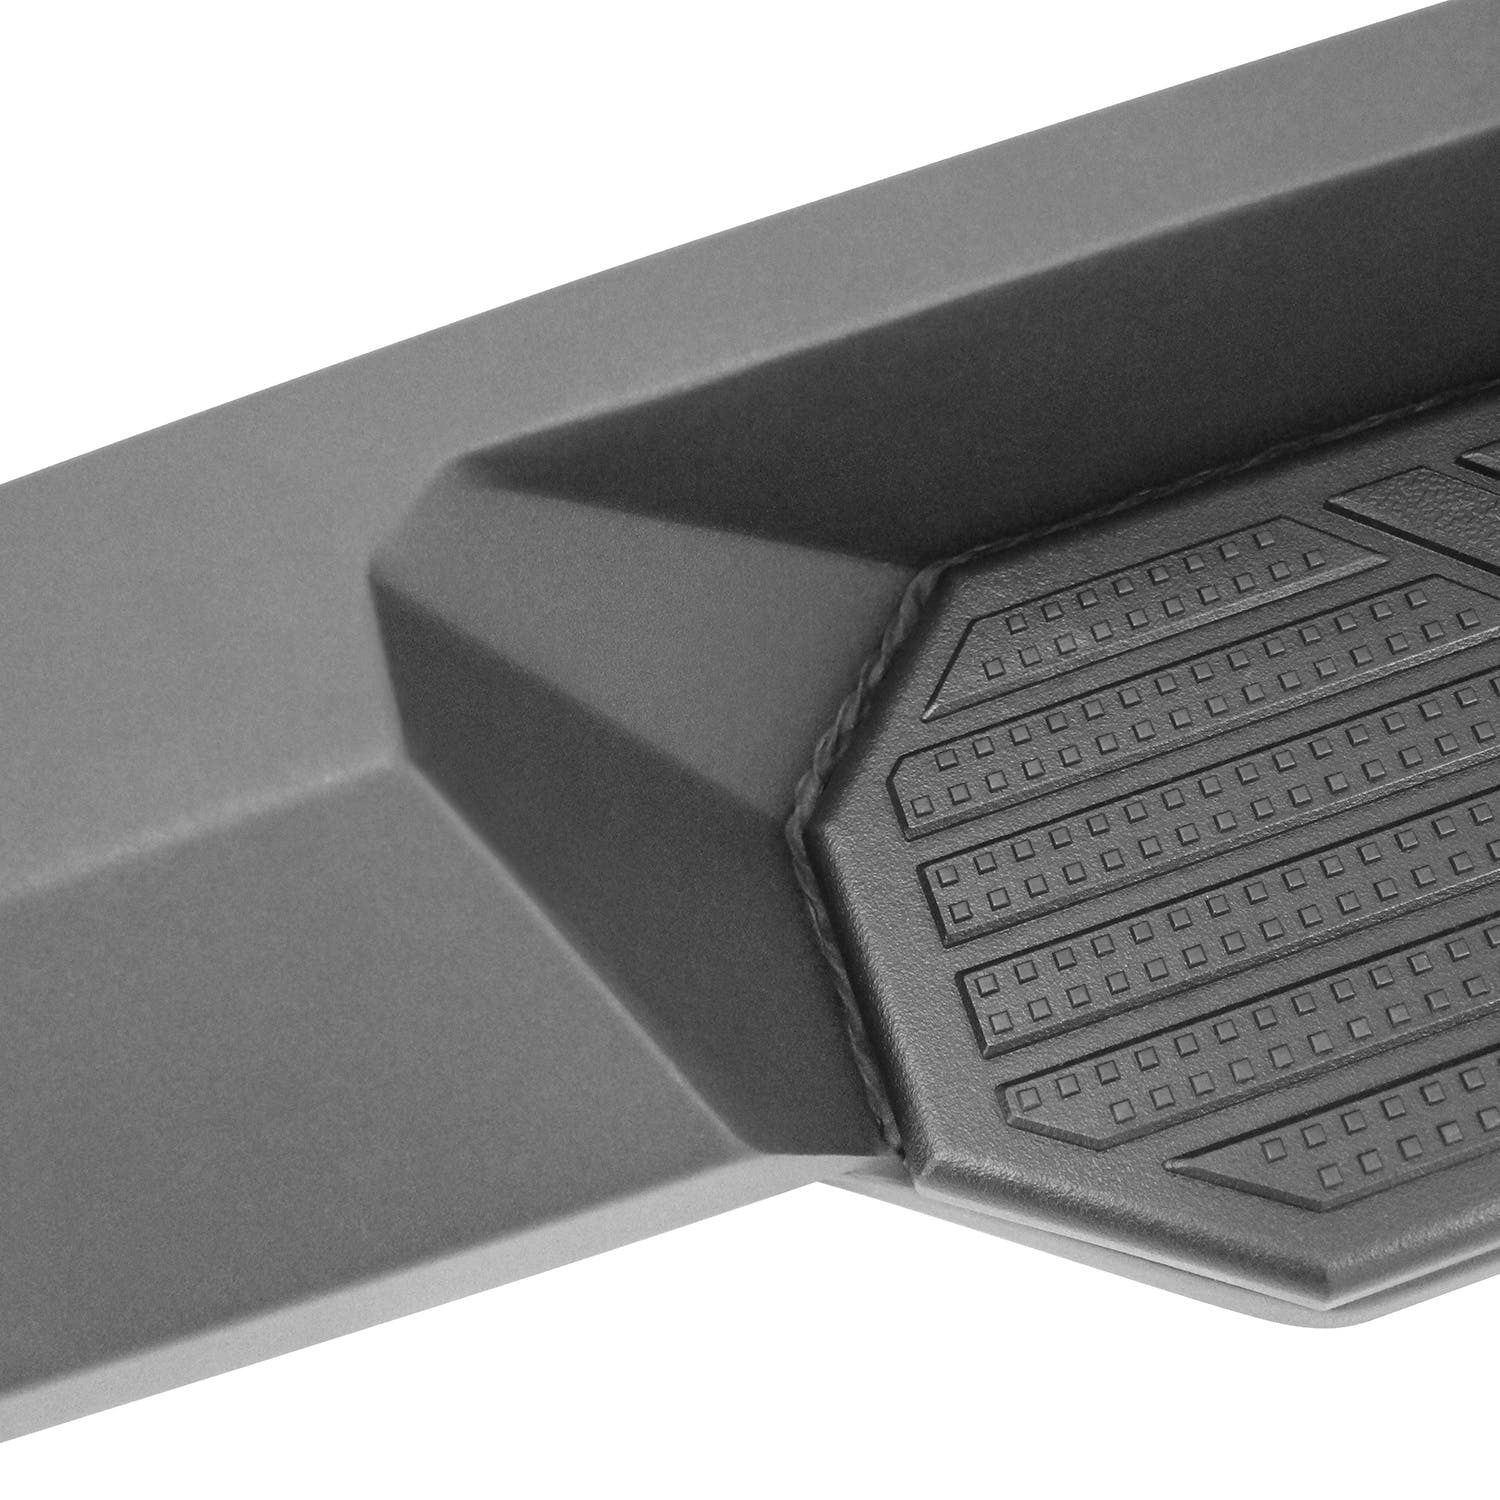 Westin Automotive 56-21335 HDX Xtreme Nerf Step Bars Textured Black